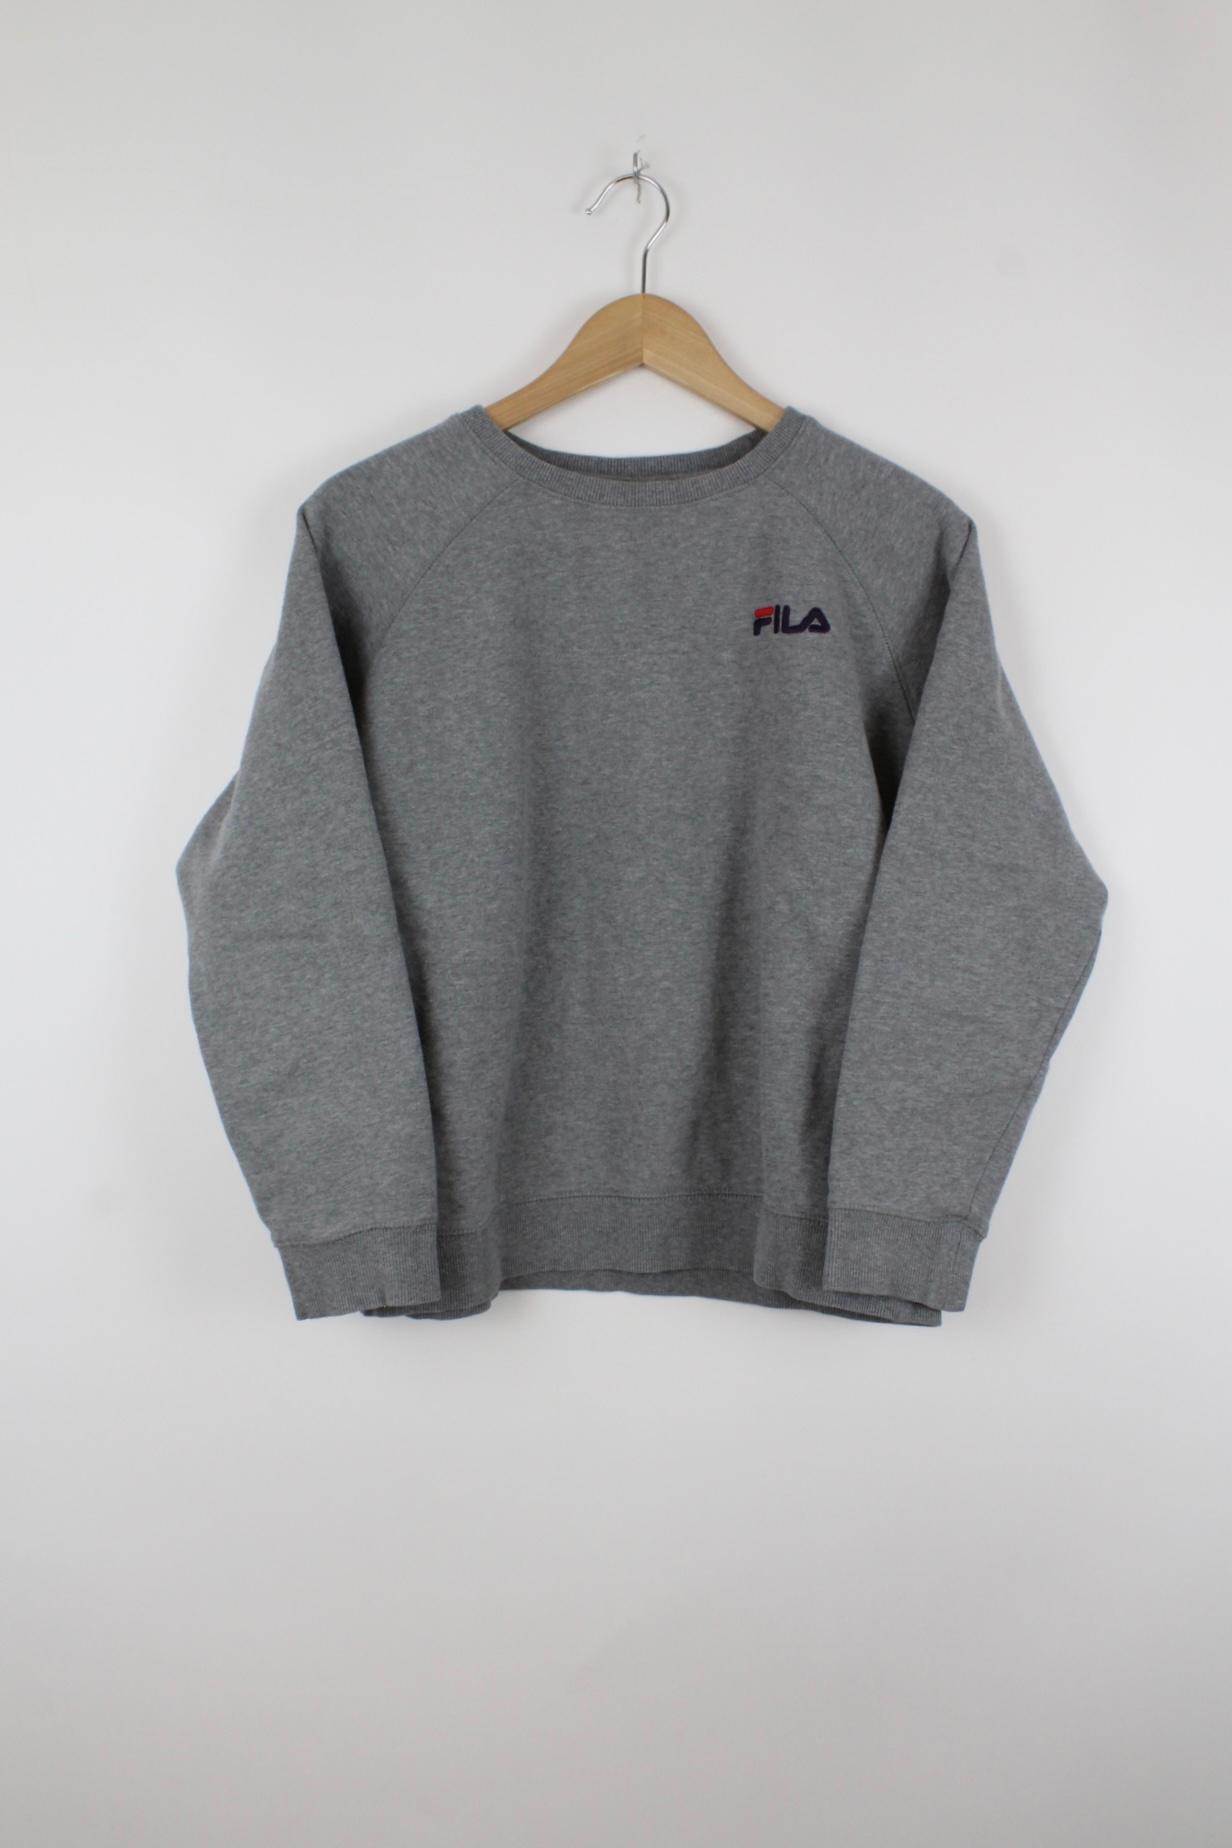 Vintage Fila Sweater Grau - S